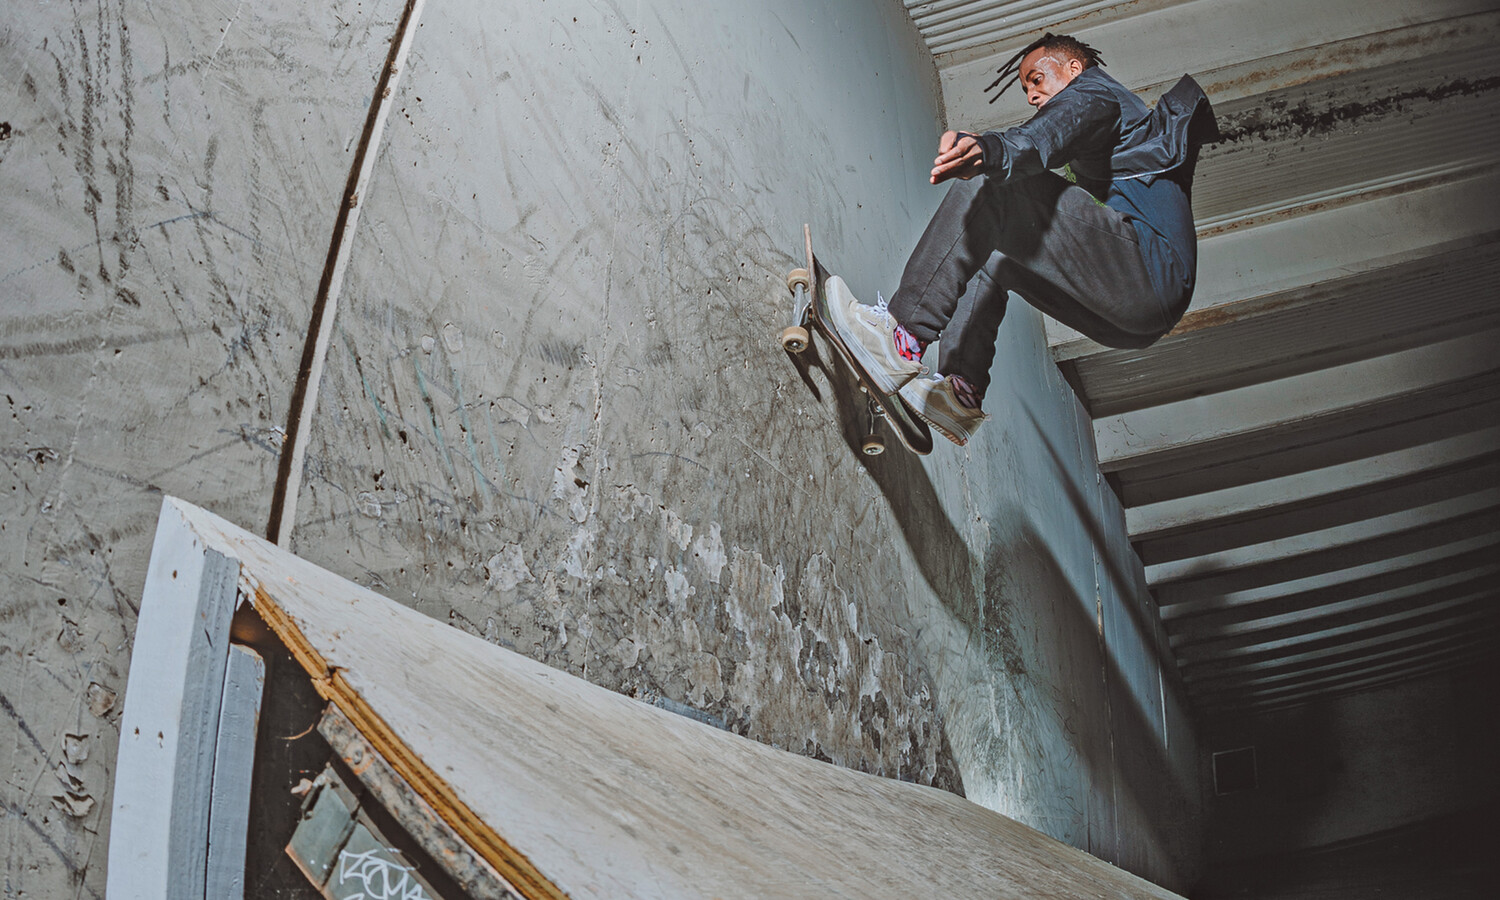 A photo of a skateboarder taken by Brandon Payne ('12).